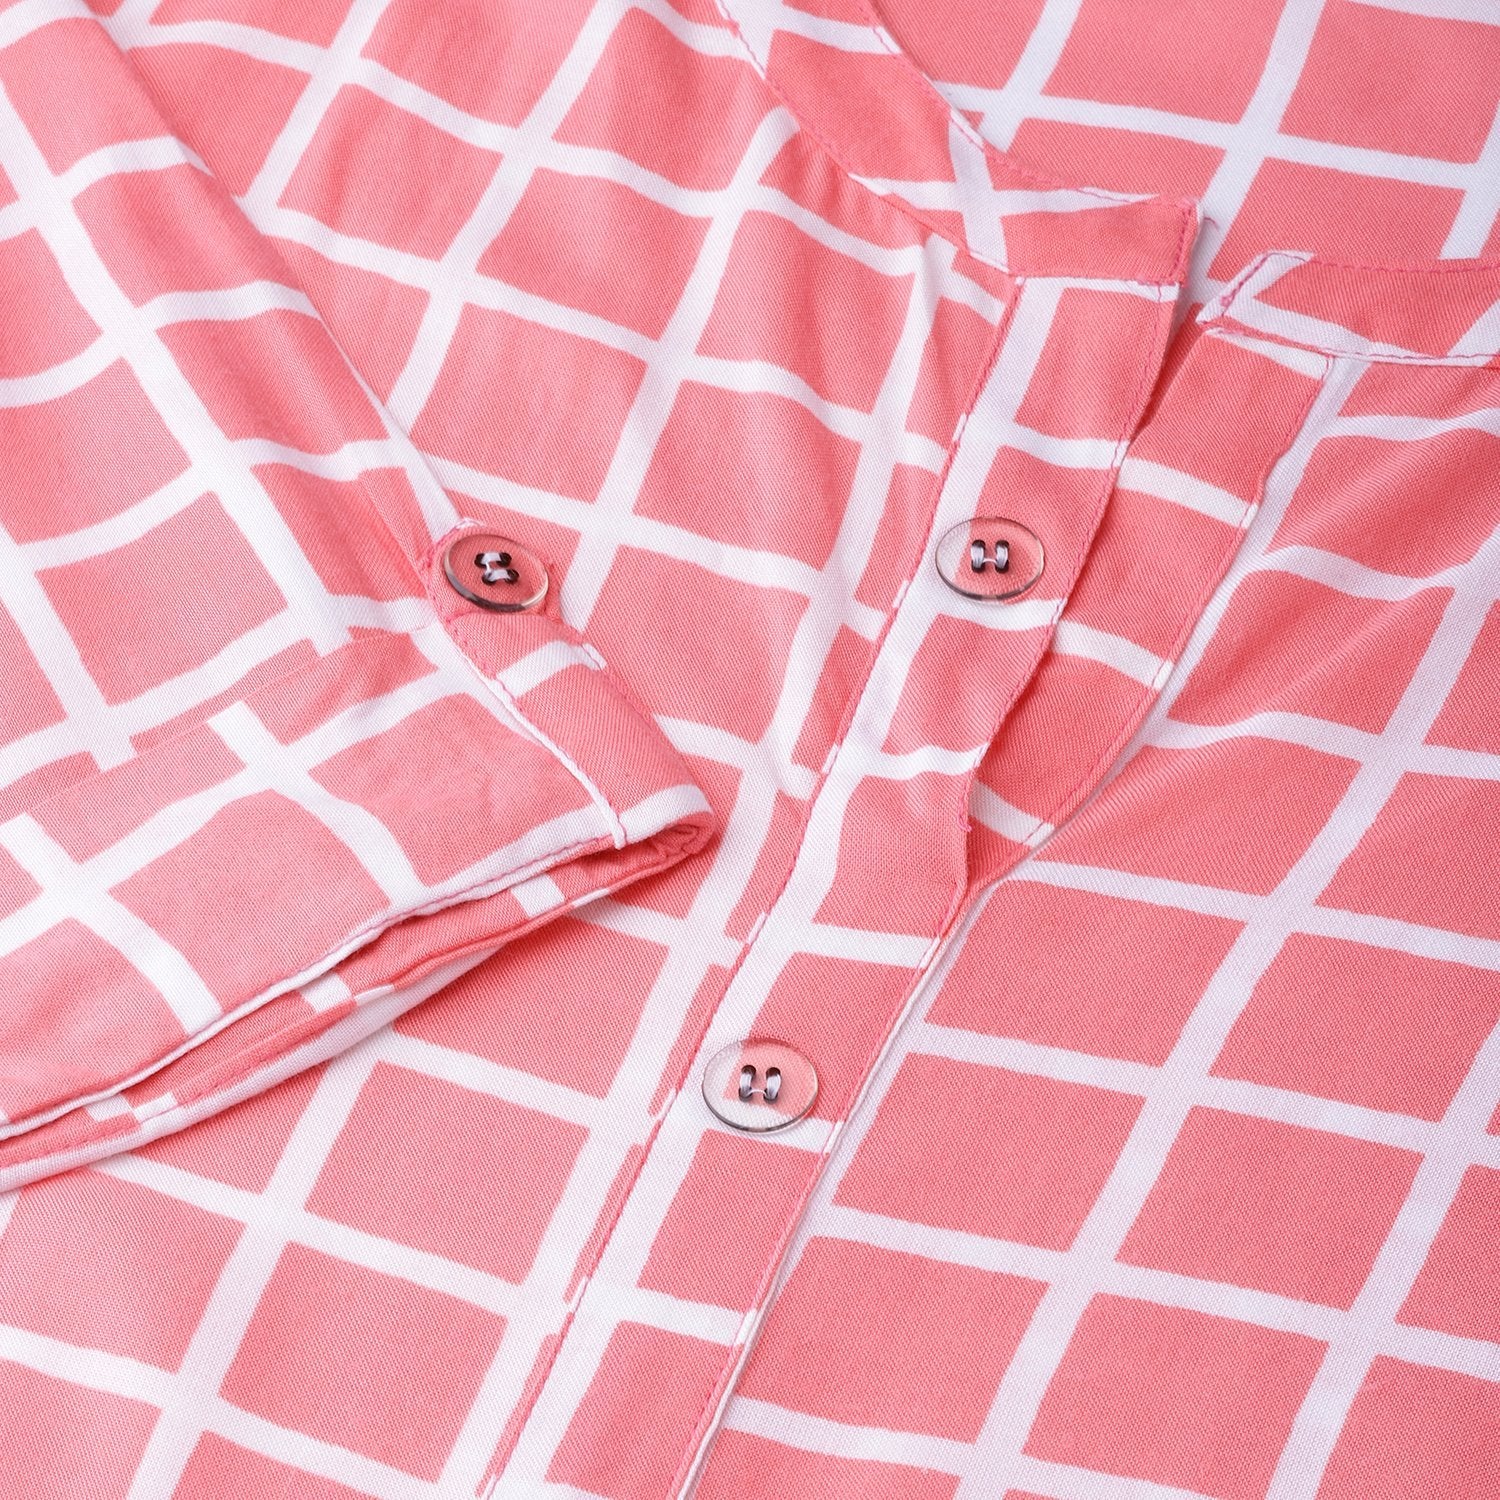 Women's Pink Printed Rayon Half Sleeve Round Neck Kurti - Myshka